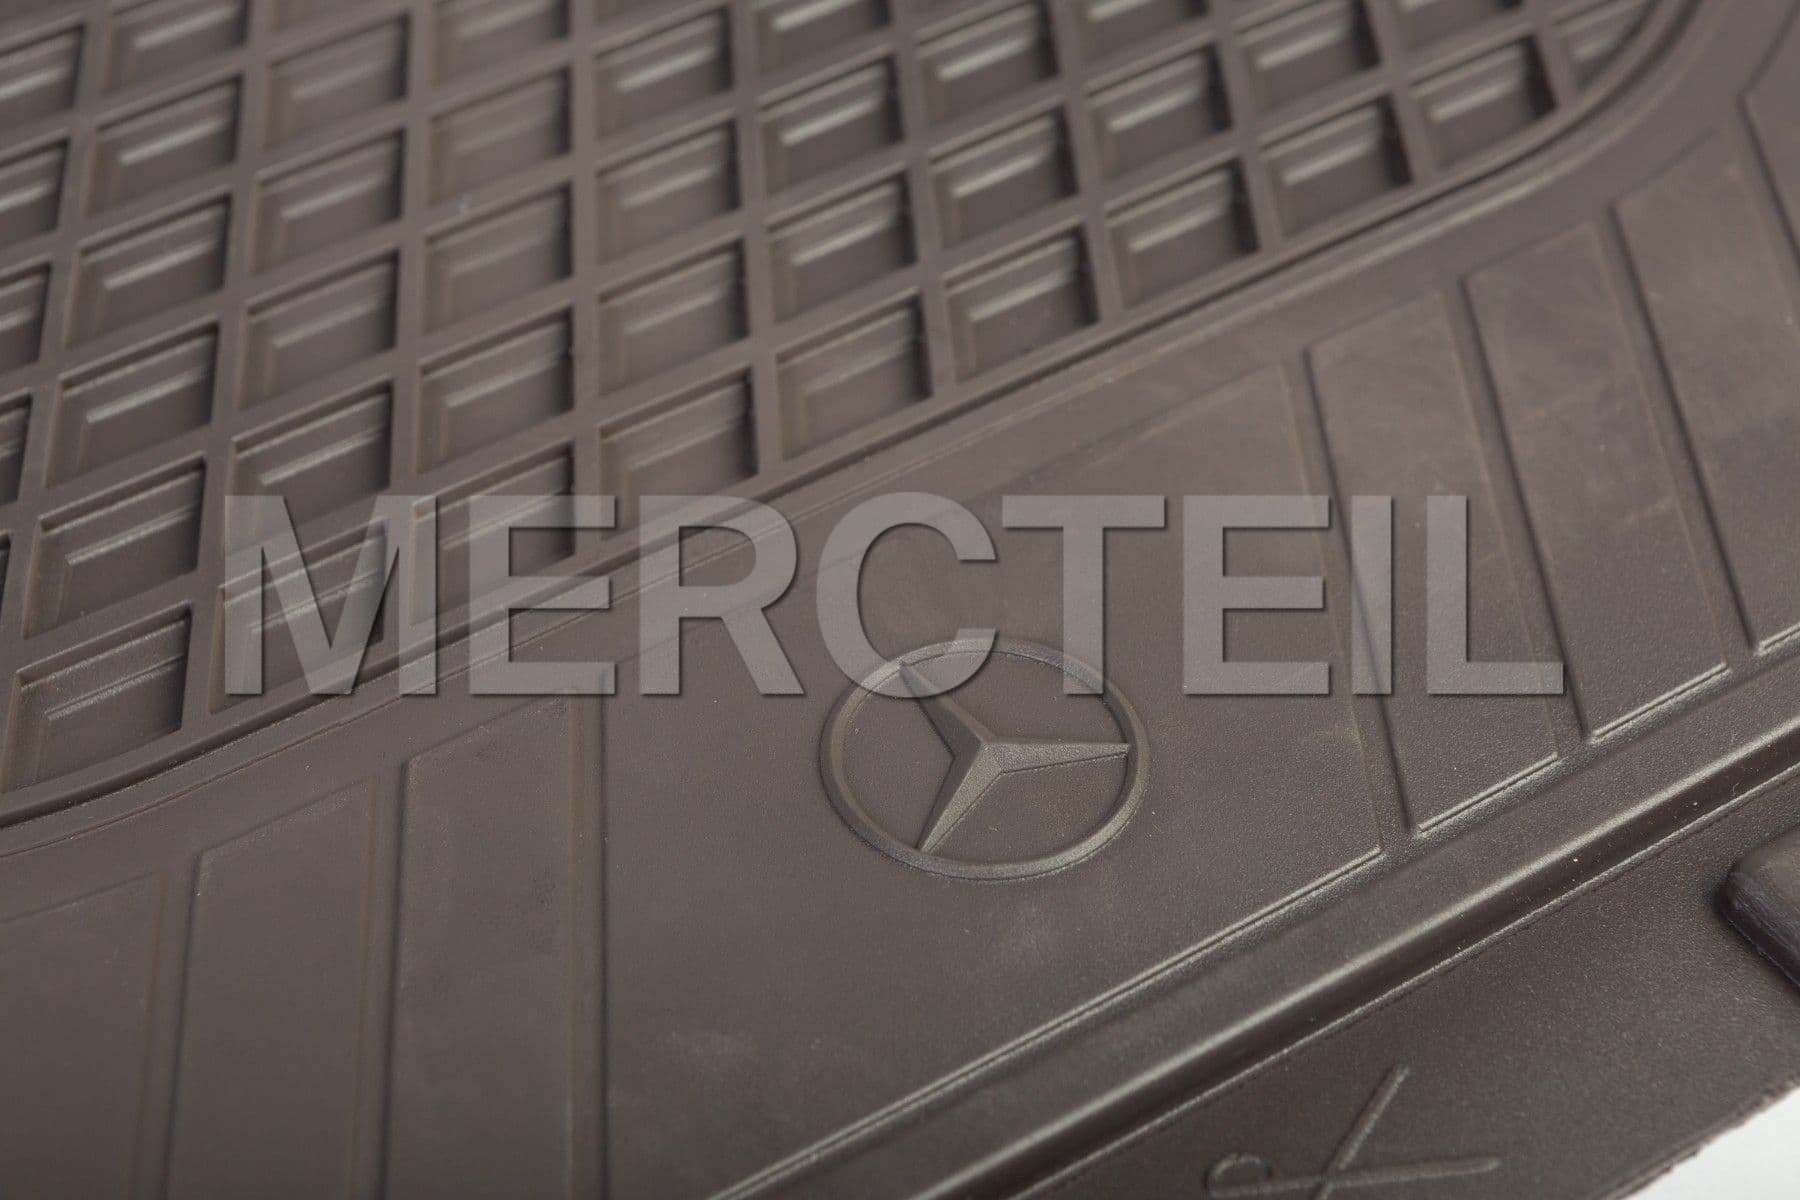 Classic S Class Rubber Floor Mats W222 Genuine Mercedes Benz (part number: A22268050488U51)